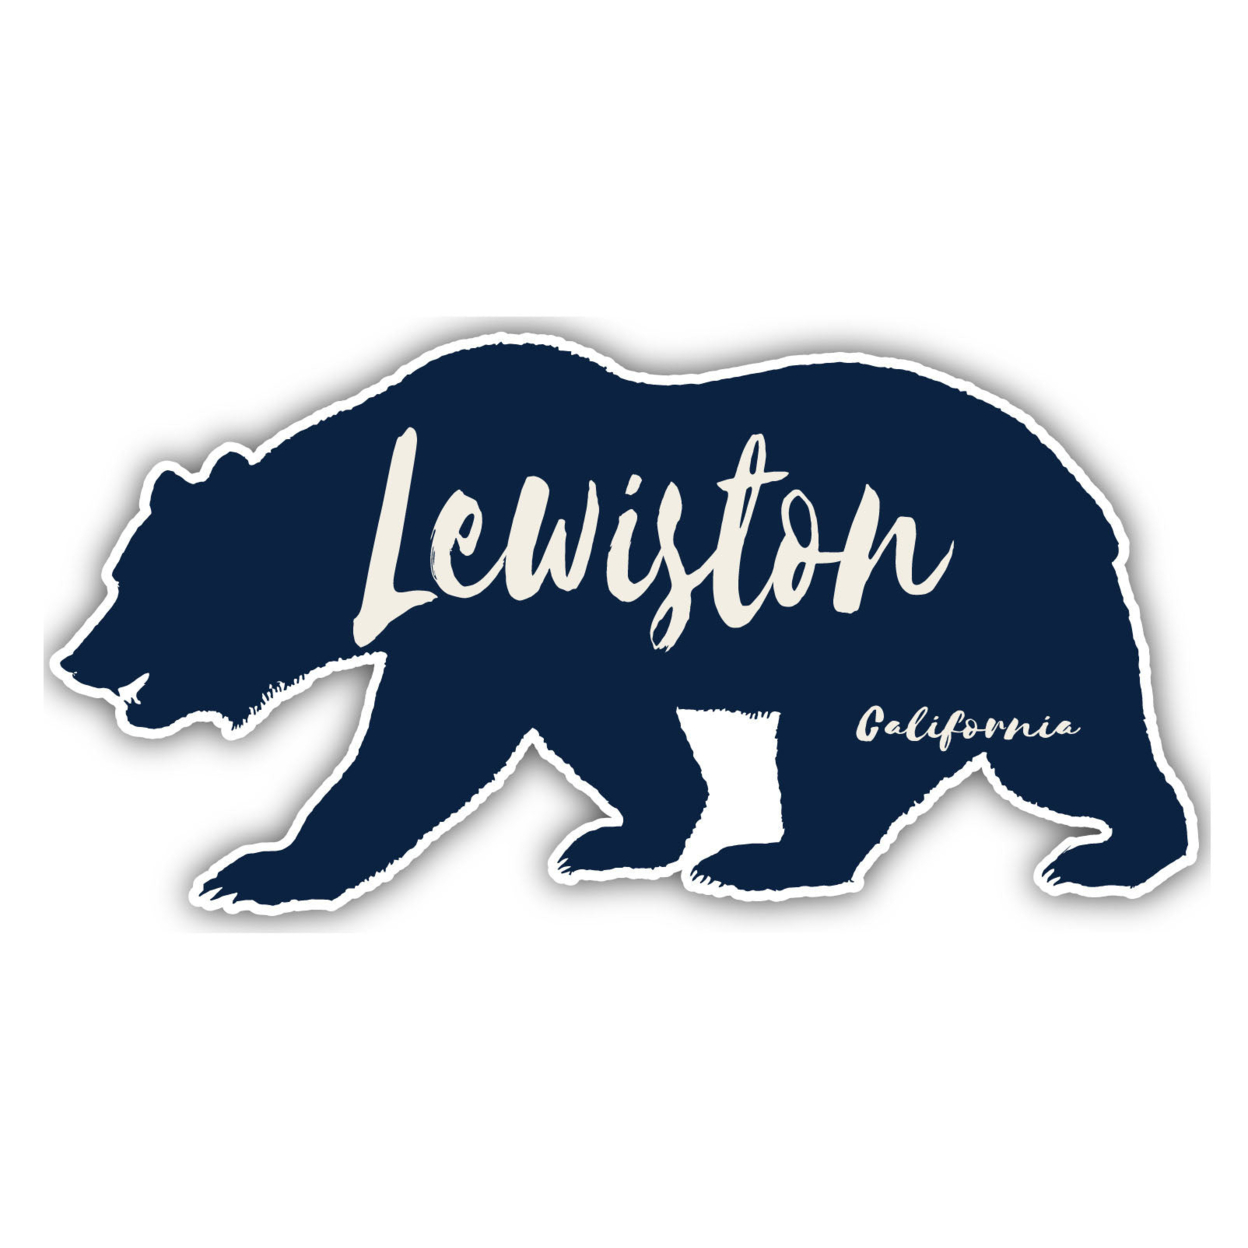 Lewiston California Souvenir Decorative Stickers (Choose Theme And Size) - 4-Inch, Bear